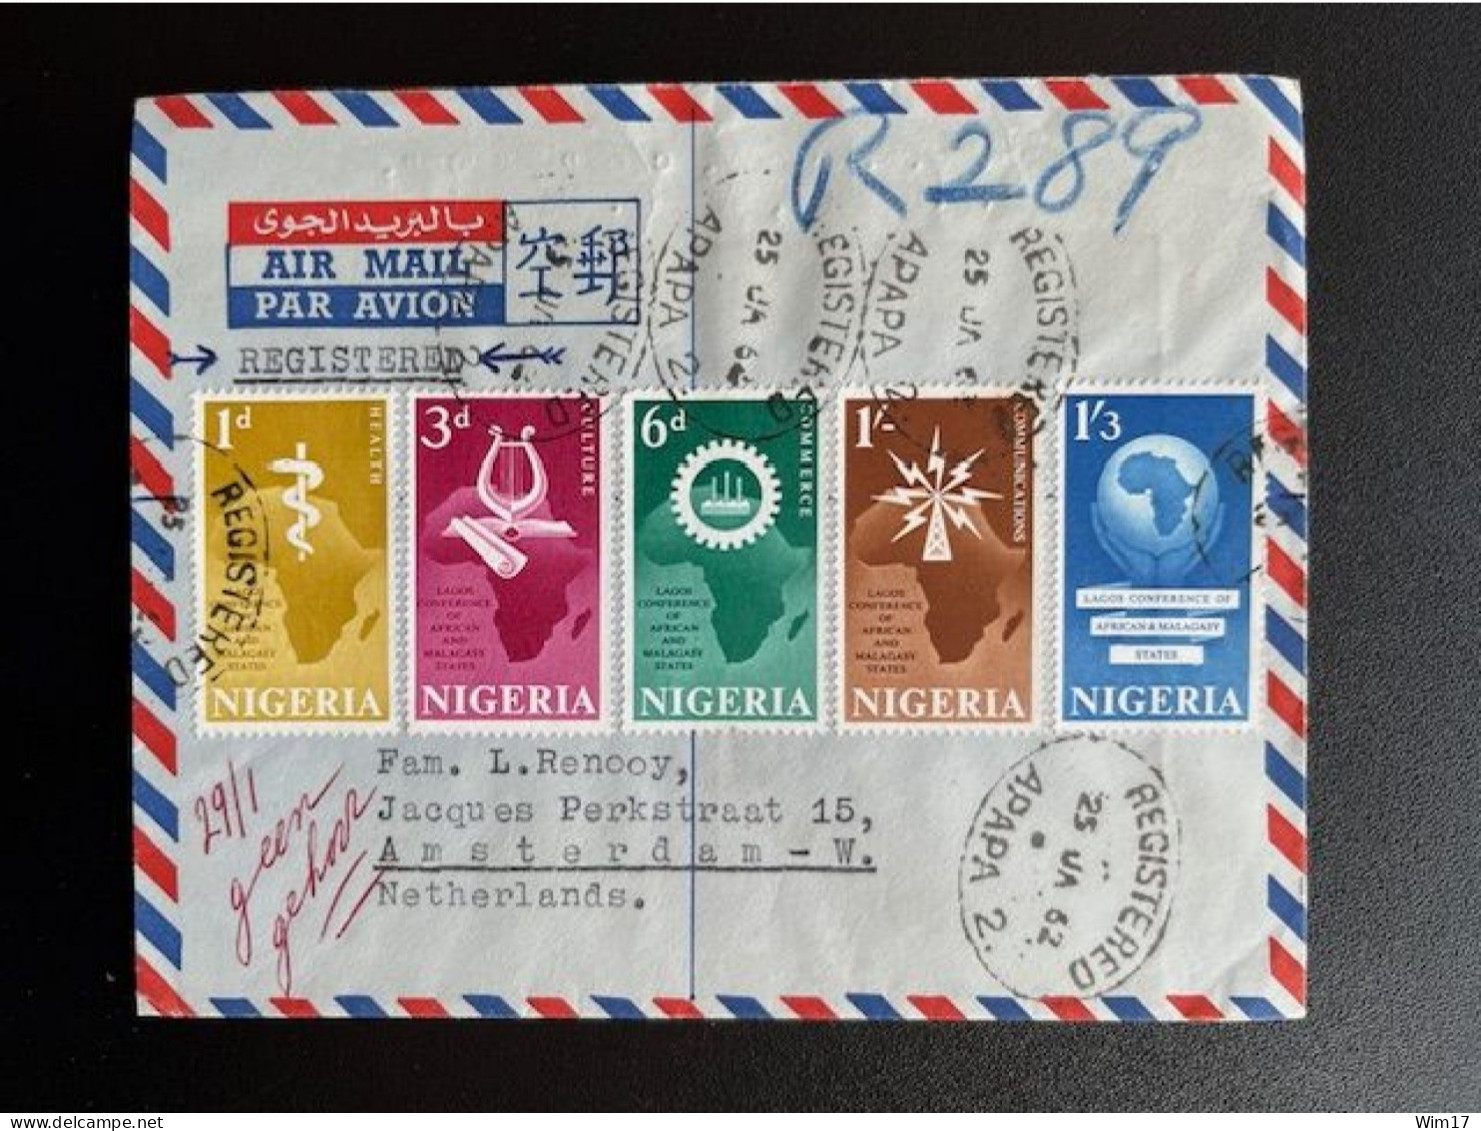 NIGERIA 1962 REGISTERED AIR MAIL LETTER FDC APAPA TO AMSTERDAM 25-01-1962 - Nigeria (1961-...)